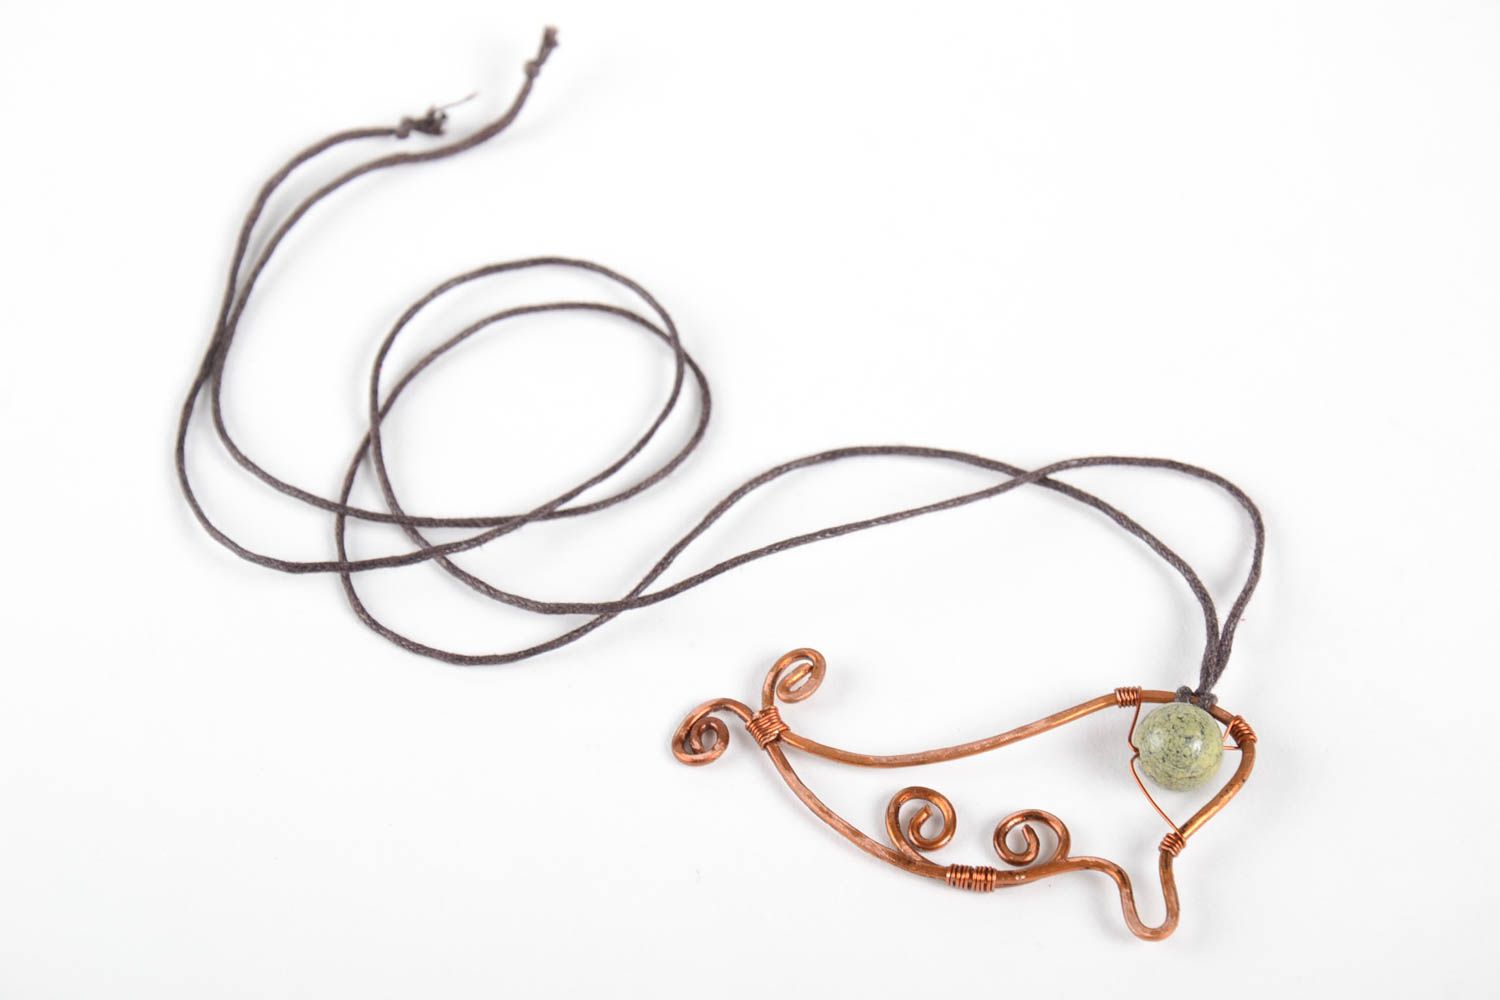 Handmade copper necklace elegant pendant handmade jewelry with natural stones photo 4